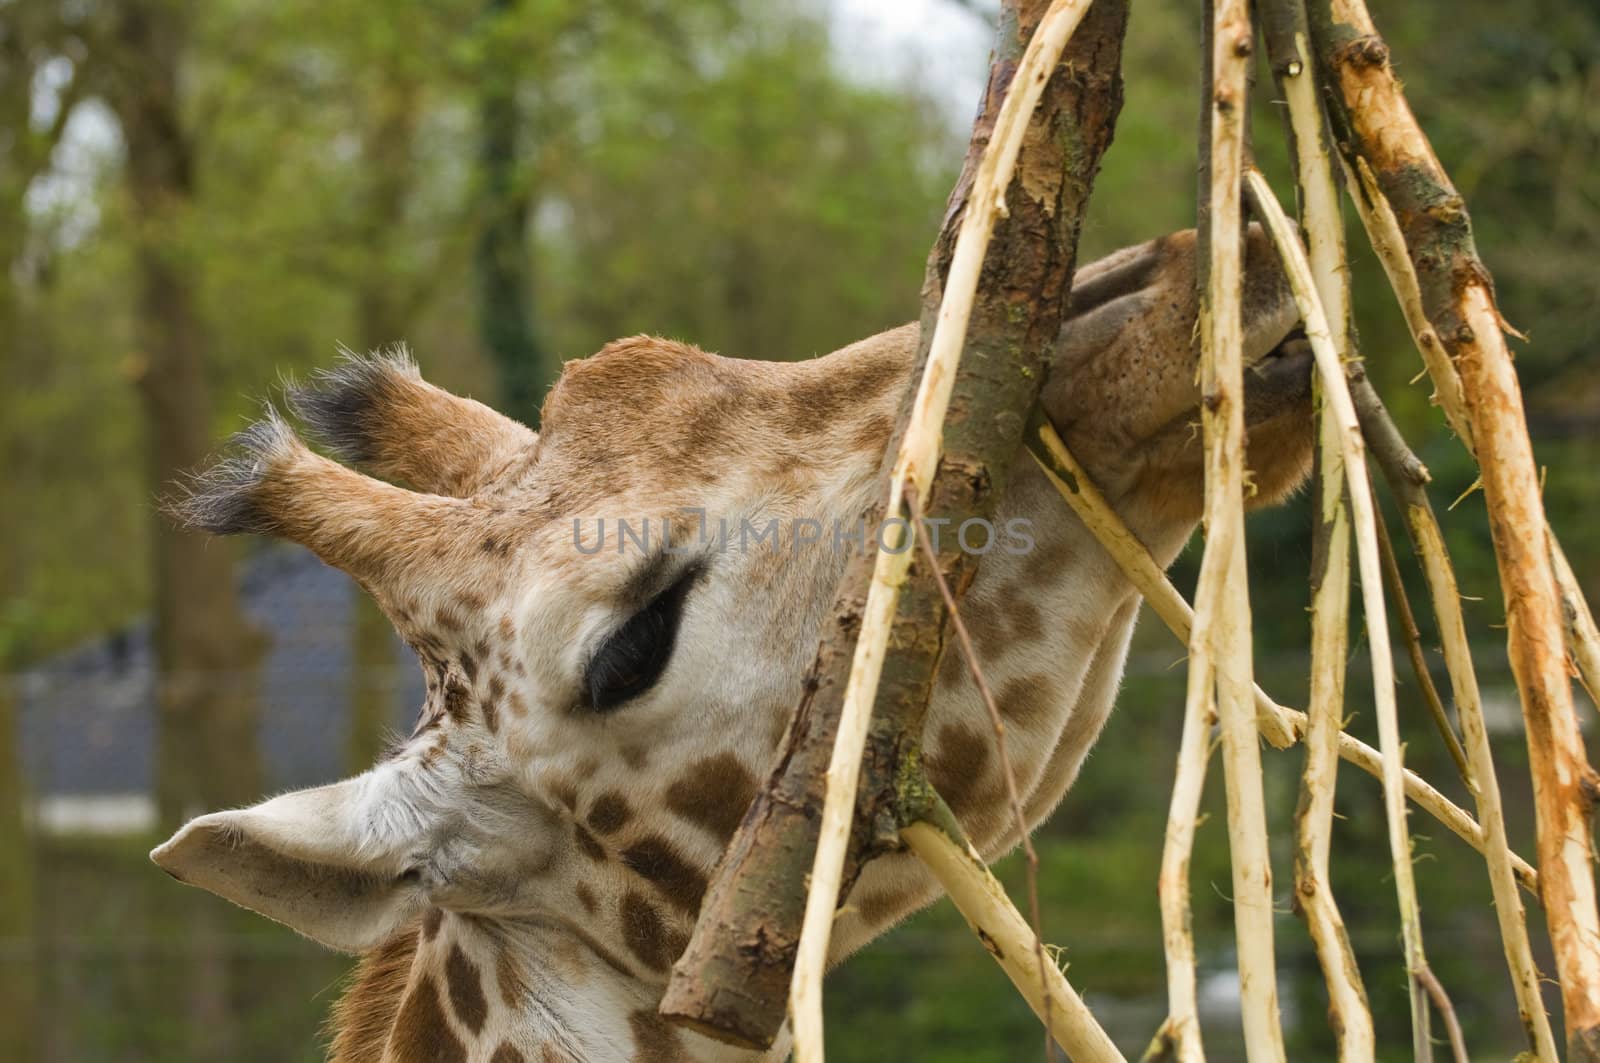 Giraffes head eating branches